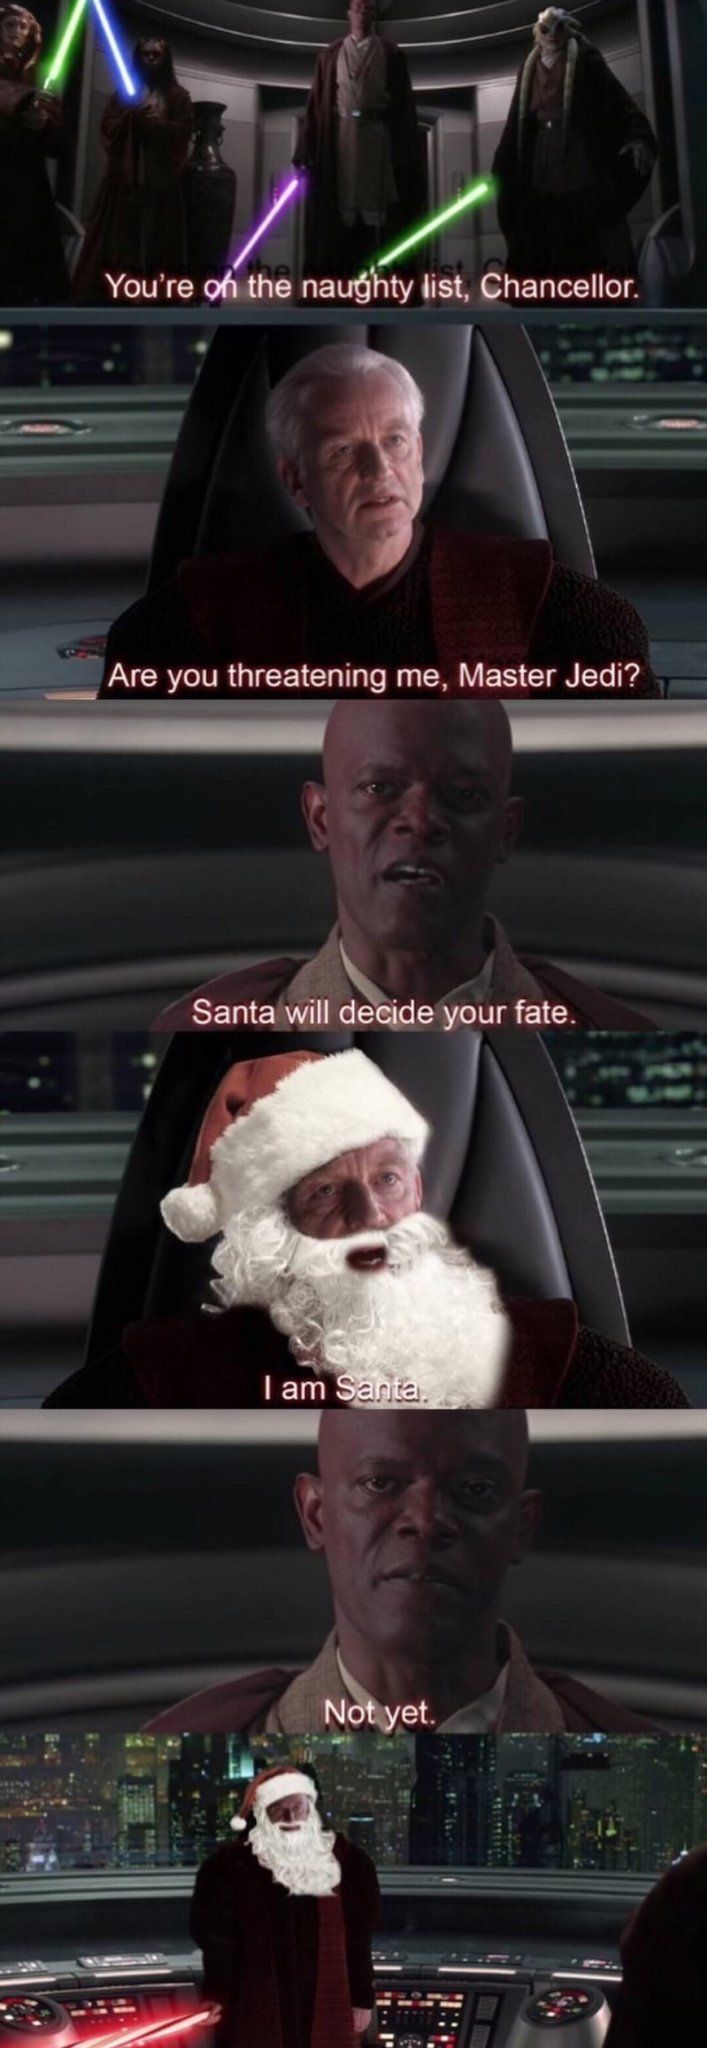 Santa Claus is executing order 66